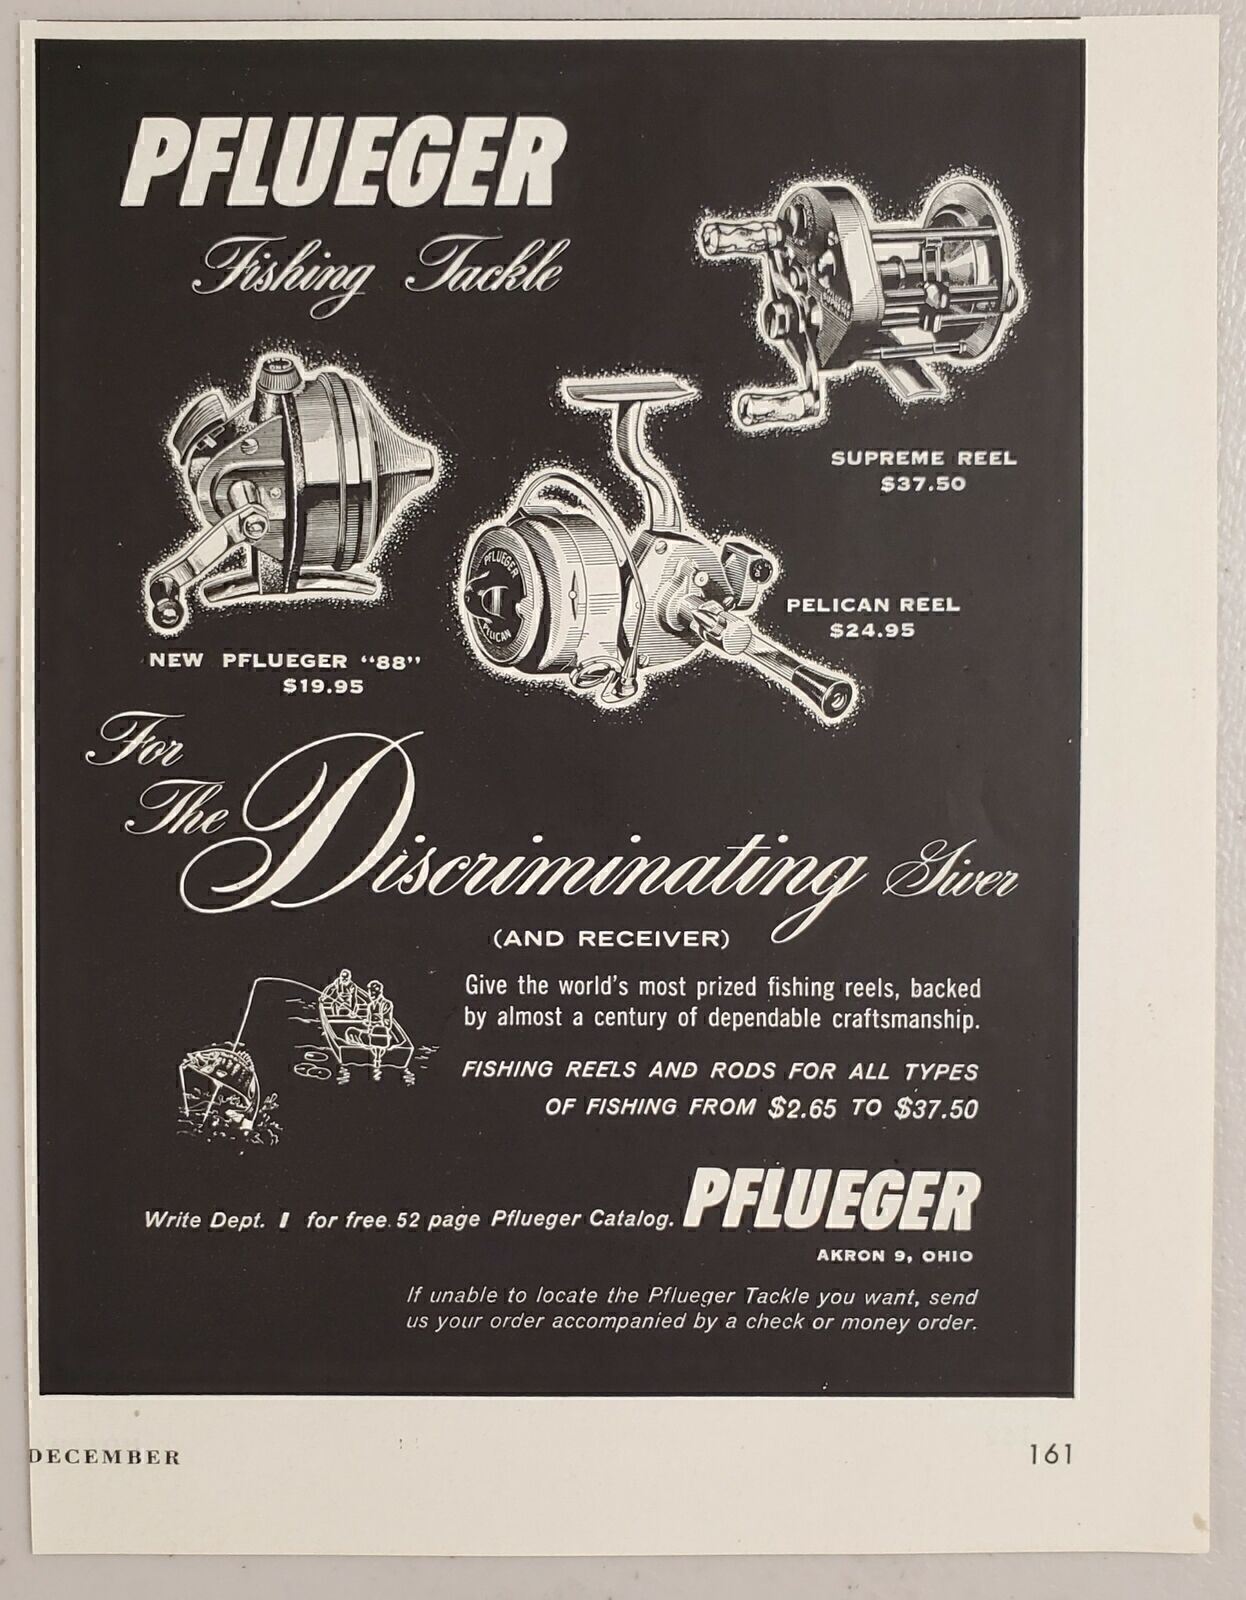 1957 Print Ad Pflueger Fishing Reels 88, Pelican, Supreme Akron,Ohio